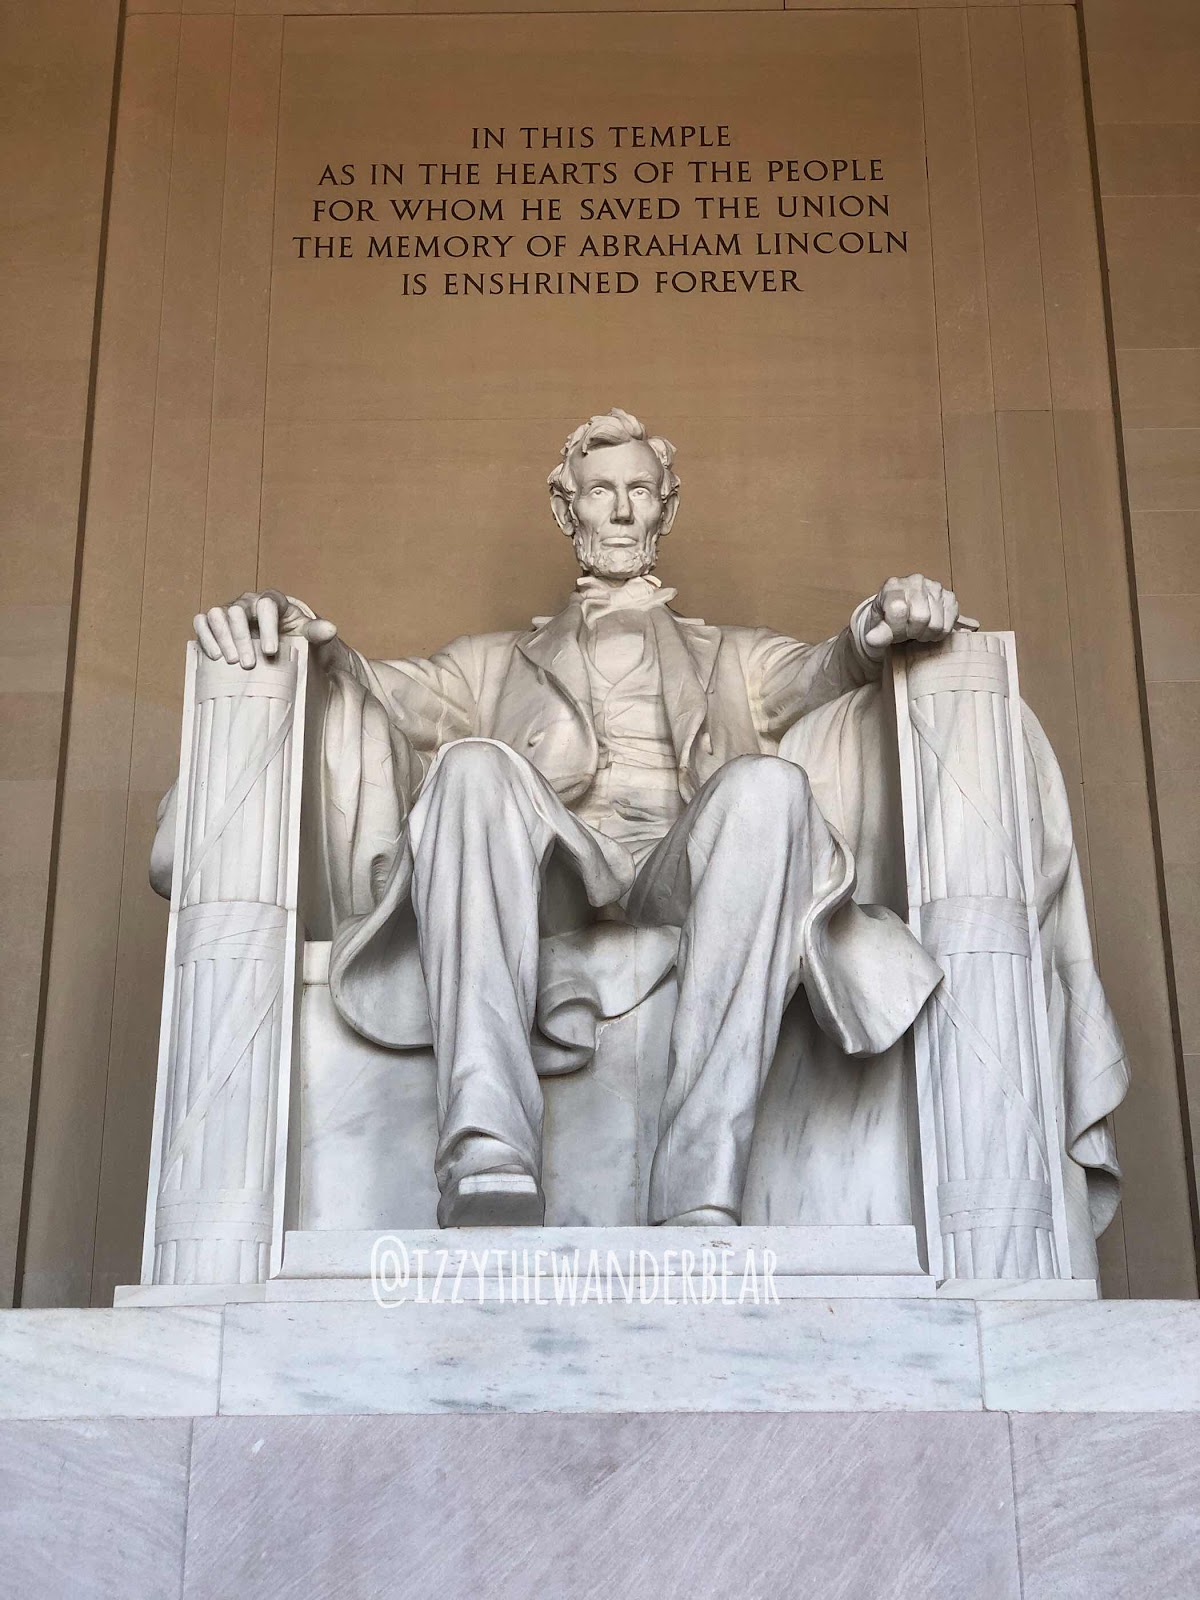 ITWB - Lincoln Memorial, Washington DC